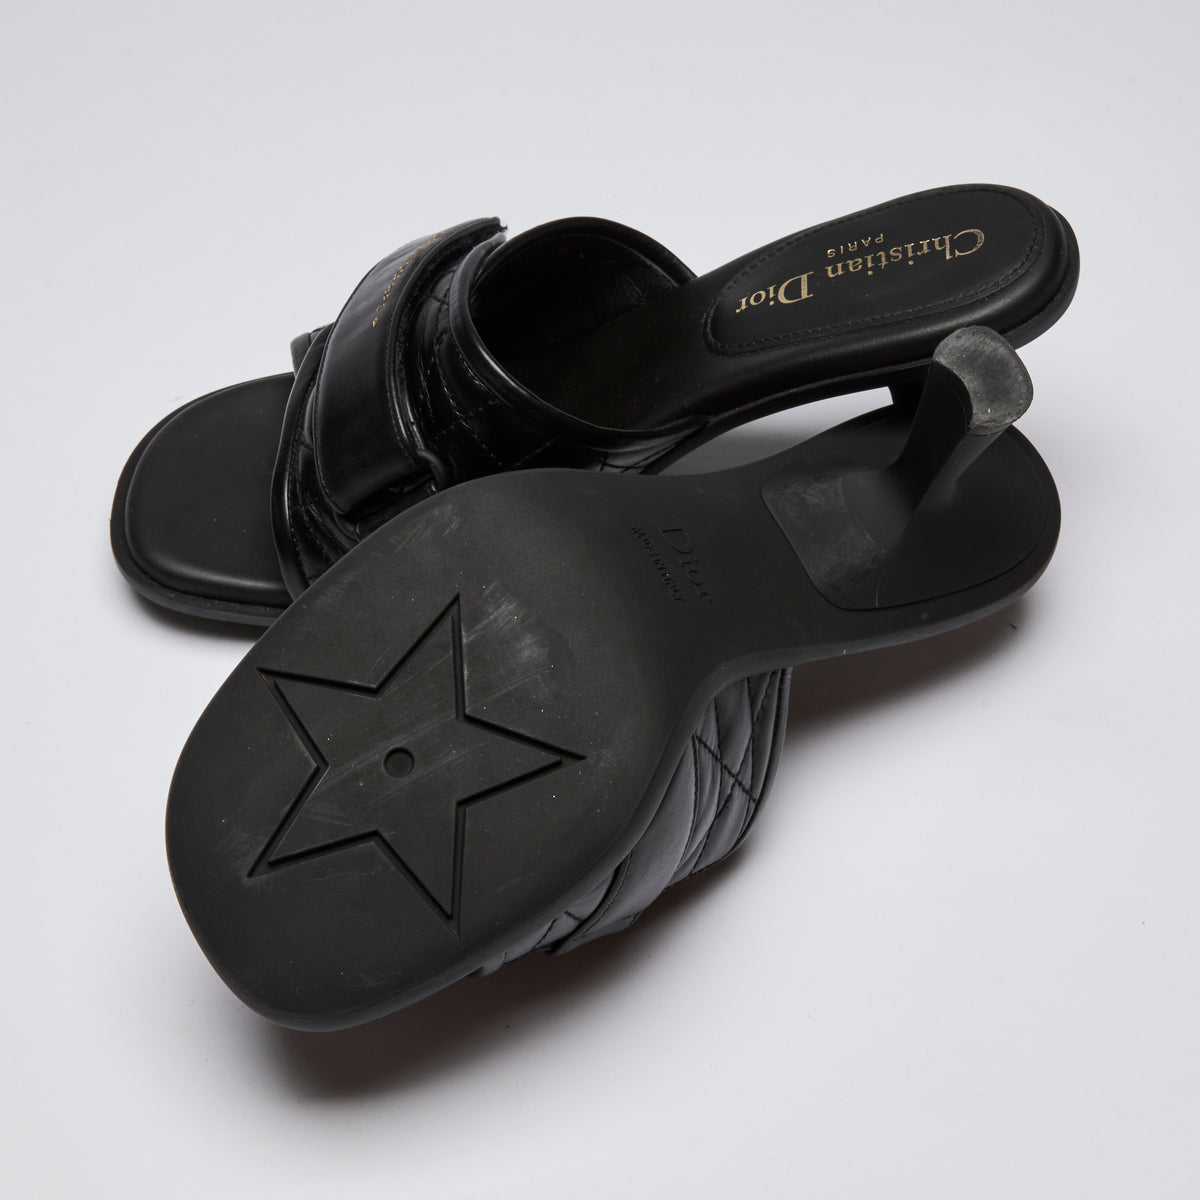 Excellent Pre-Loved Black Leather Velcro Strap Heeled Sandals.(bottom)